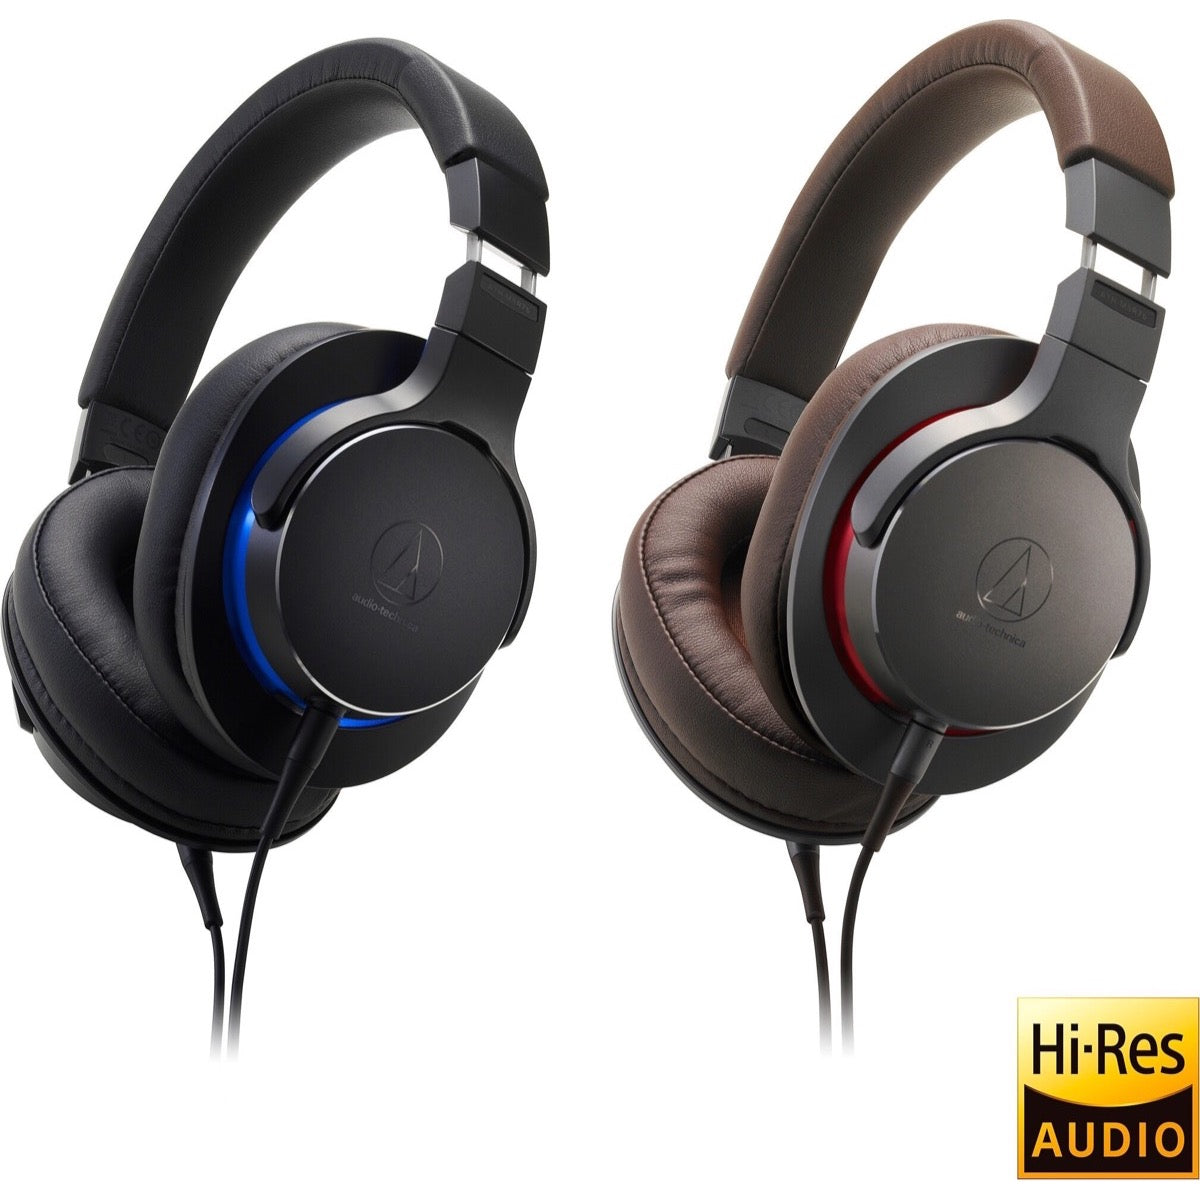 Audio-Technica ATH-MSR7b Over-Ear High-Resolution Headphones, Gunmetal